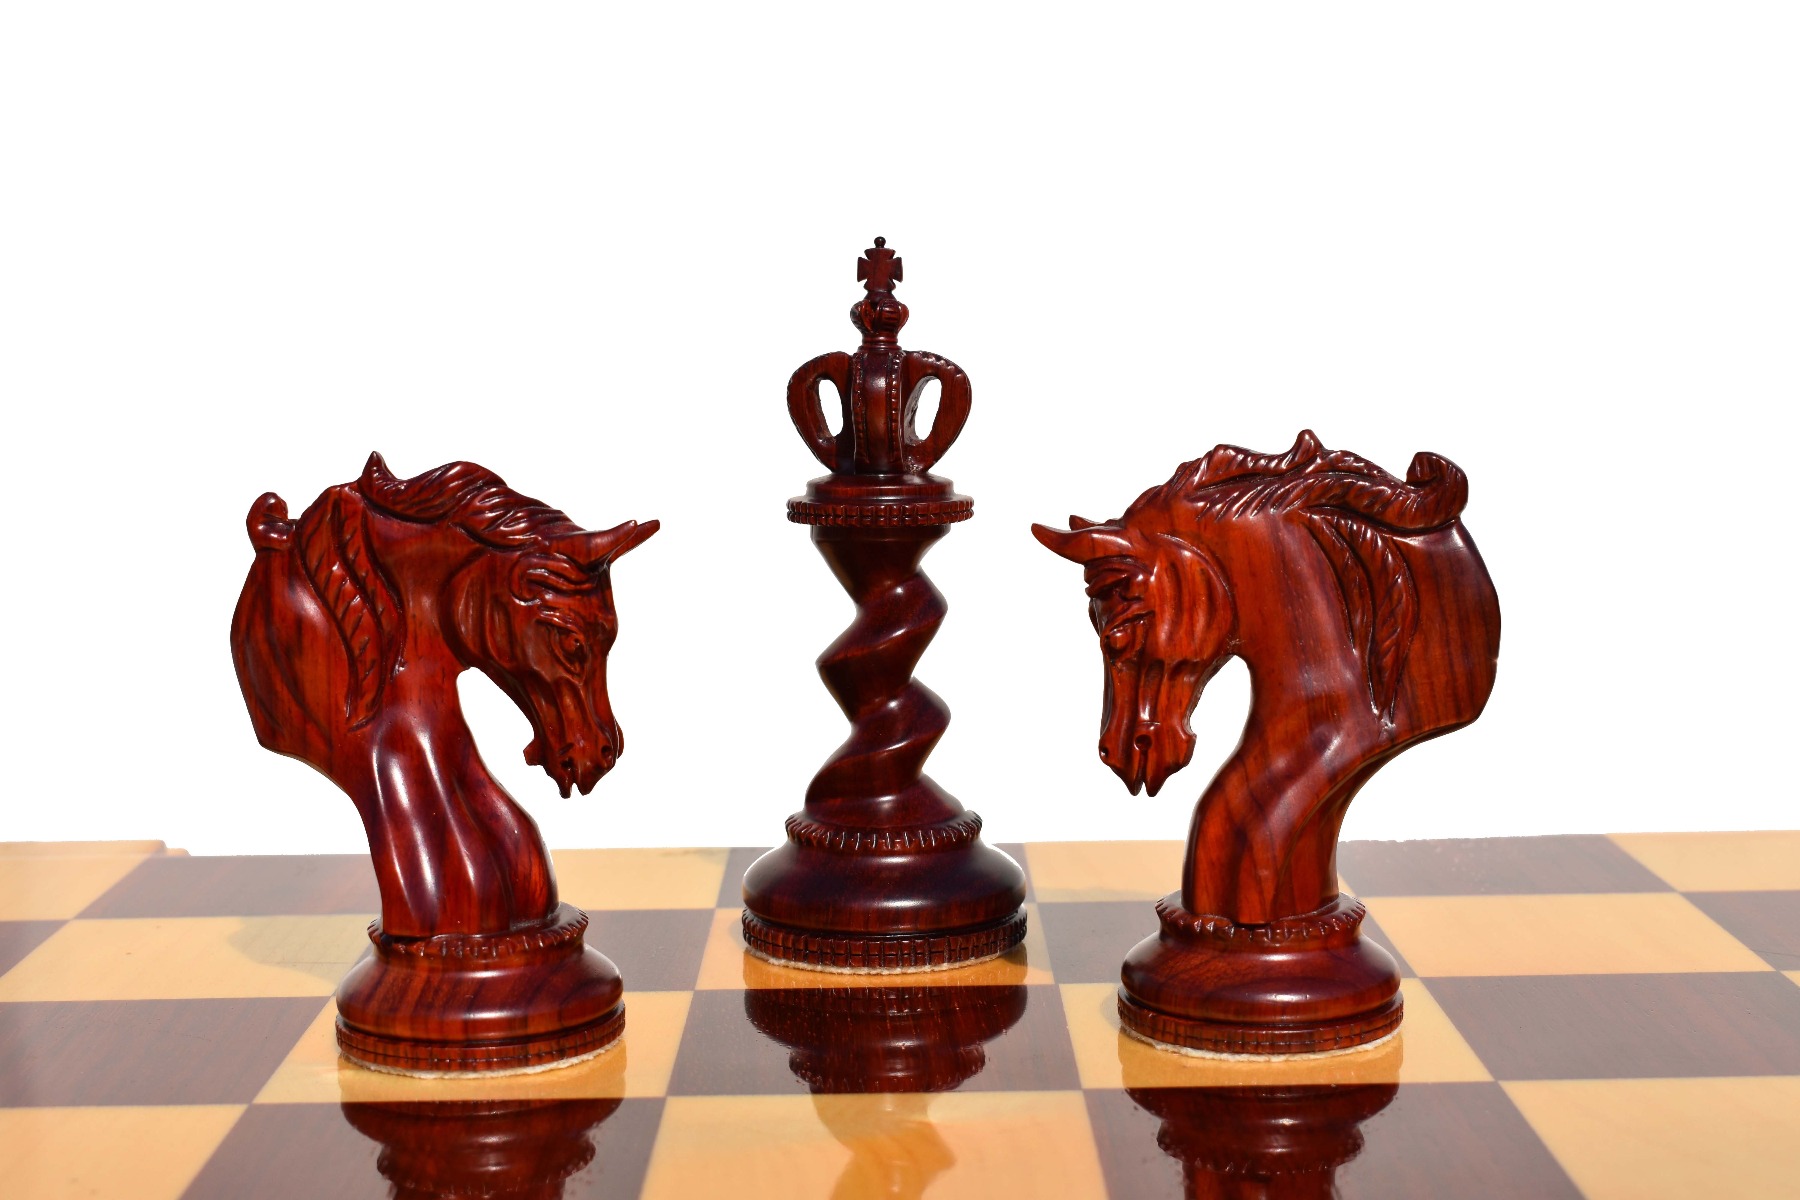 4.5 Jacques Staunton 1849 - Luxury Brass Metal Chess Set- Chess